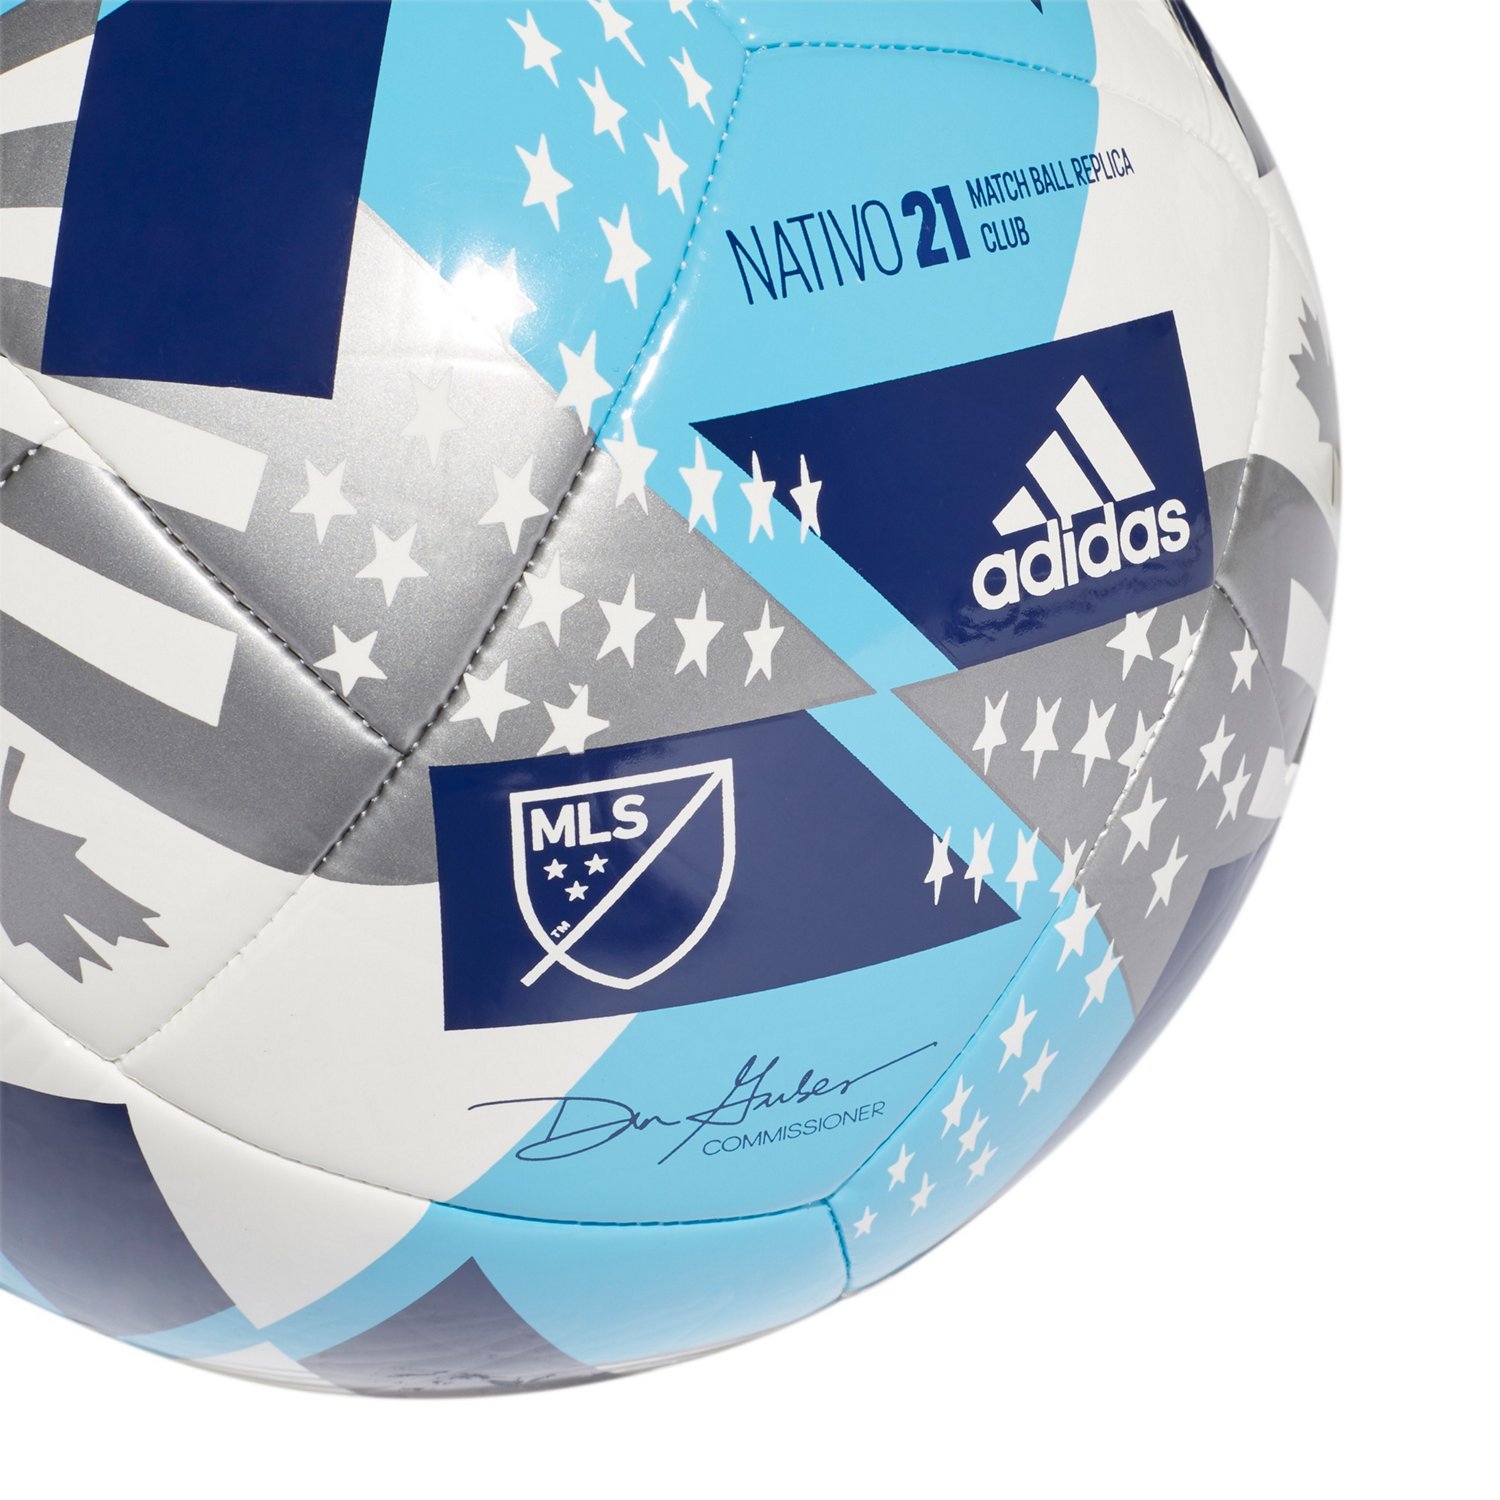 adidas MLS Club Soccer Ball Free Shipping at Academy